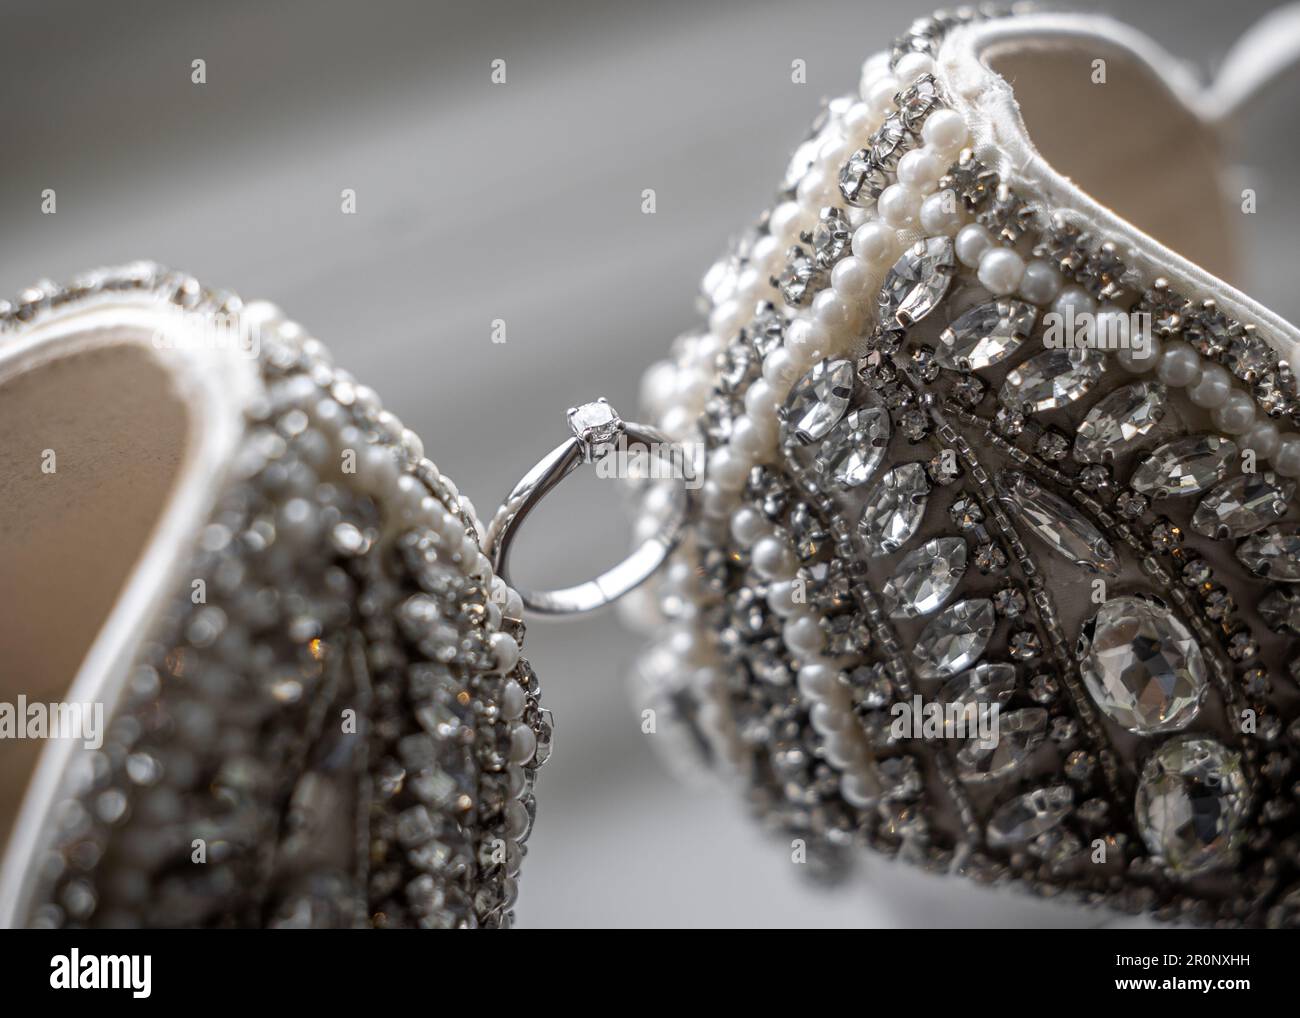 Beautiful diamond solitaire wedding engagement ring held between stunning jewel encrusted high heel shoes Stock Photo